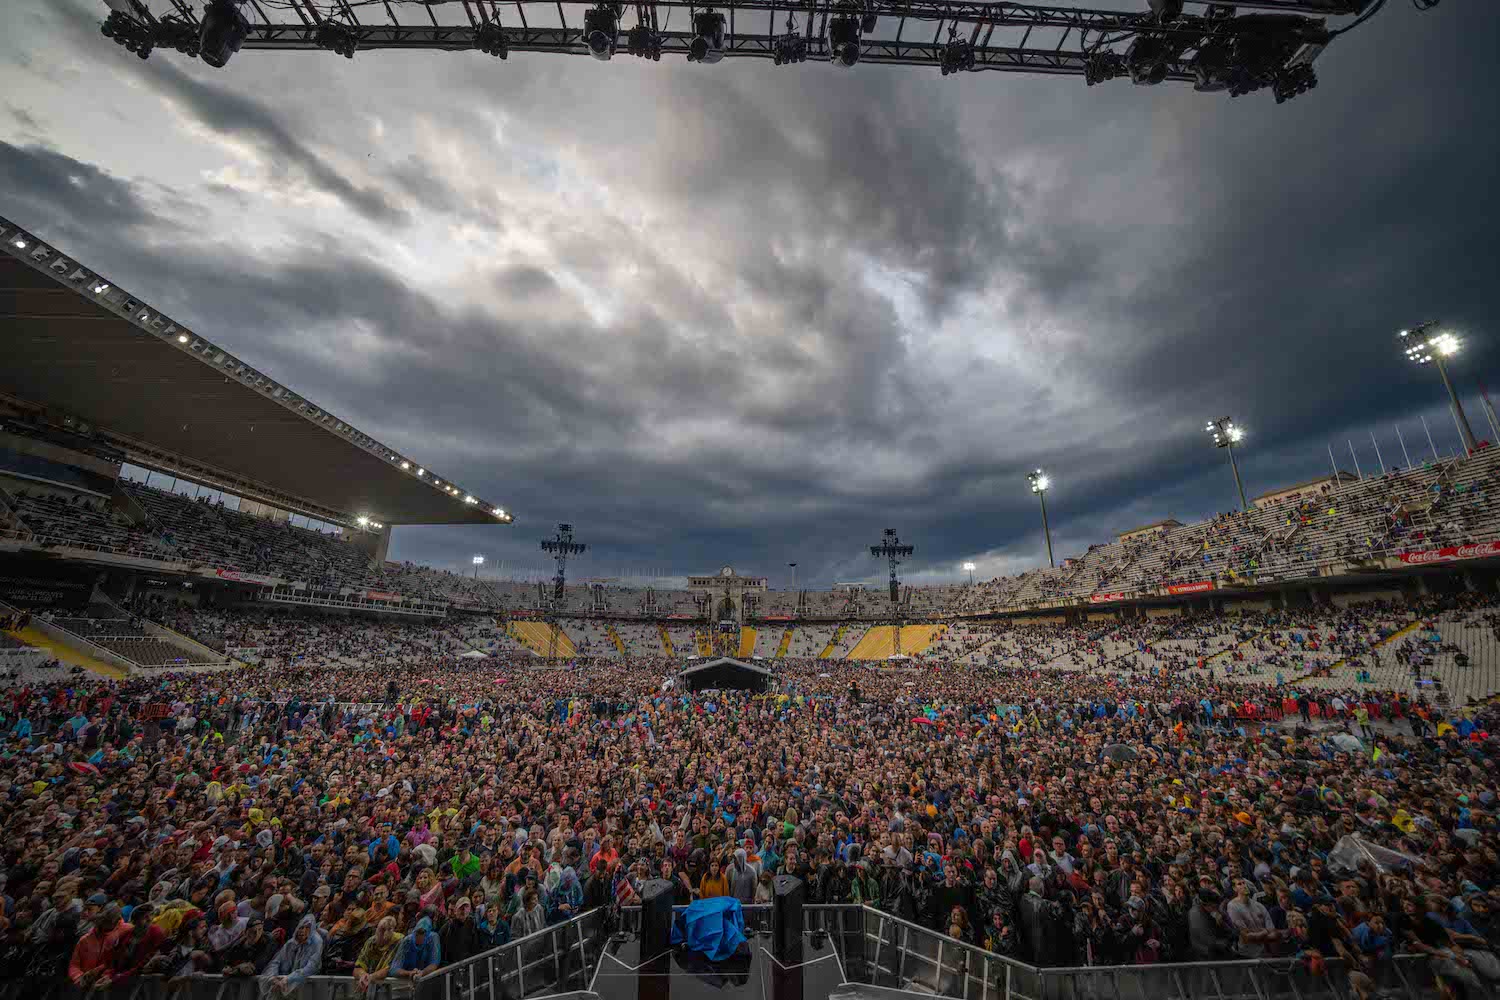 Bruce Springsteen & E Street Band at Estadi Olímpic, Barcelona, Spain on April 30, 2023.